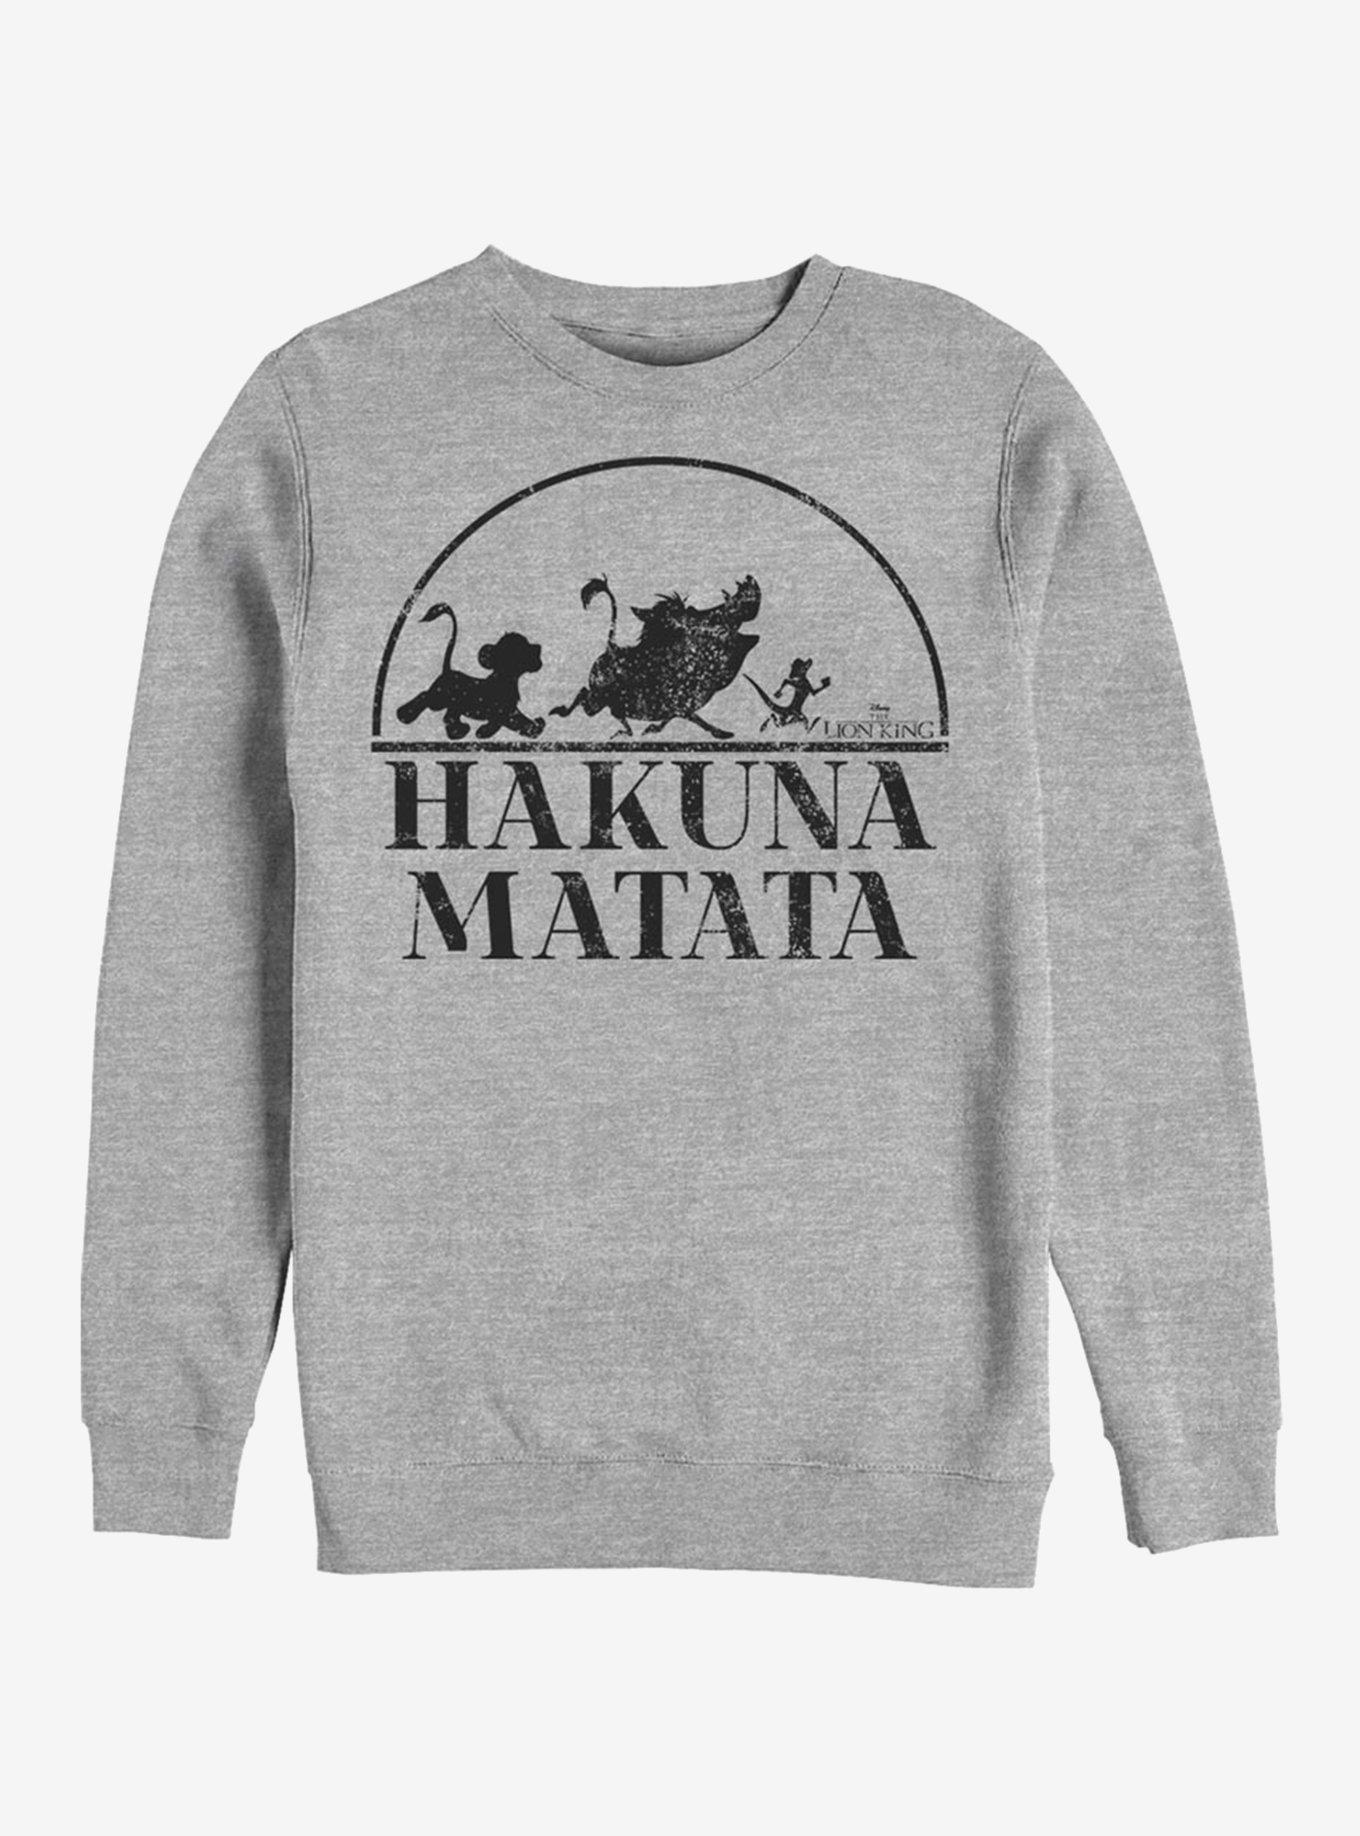 The GREY Matata Lion Hot Disney | - King Hakuna Topic Sweatshirt